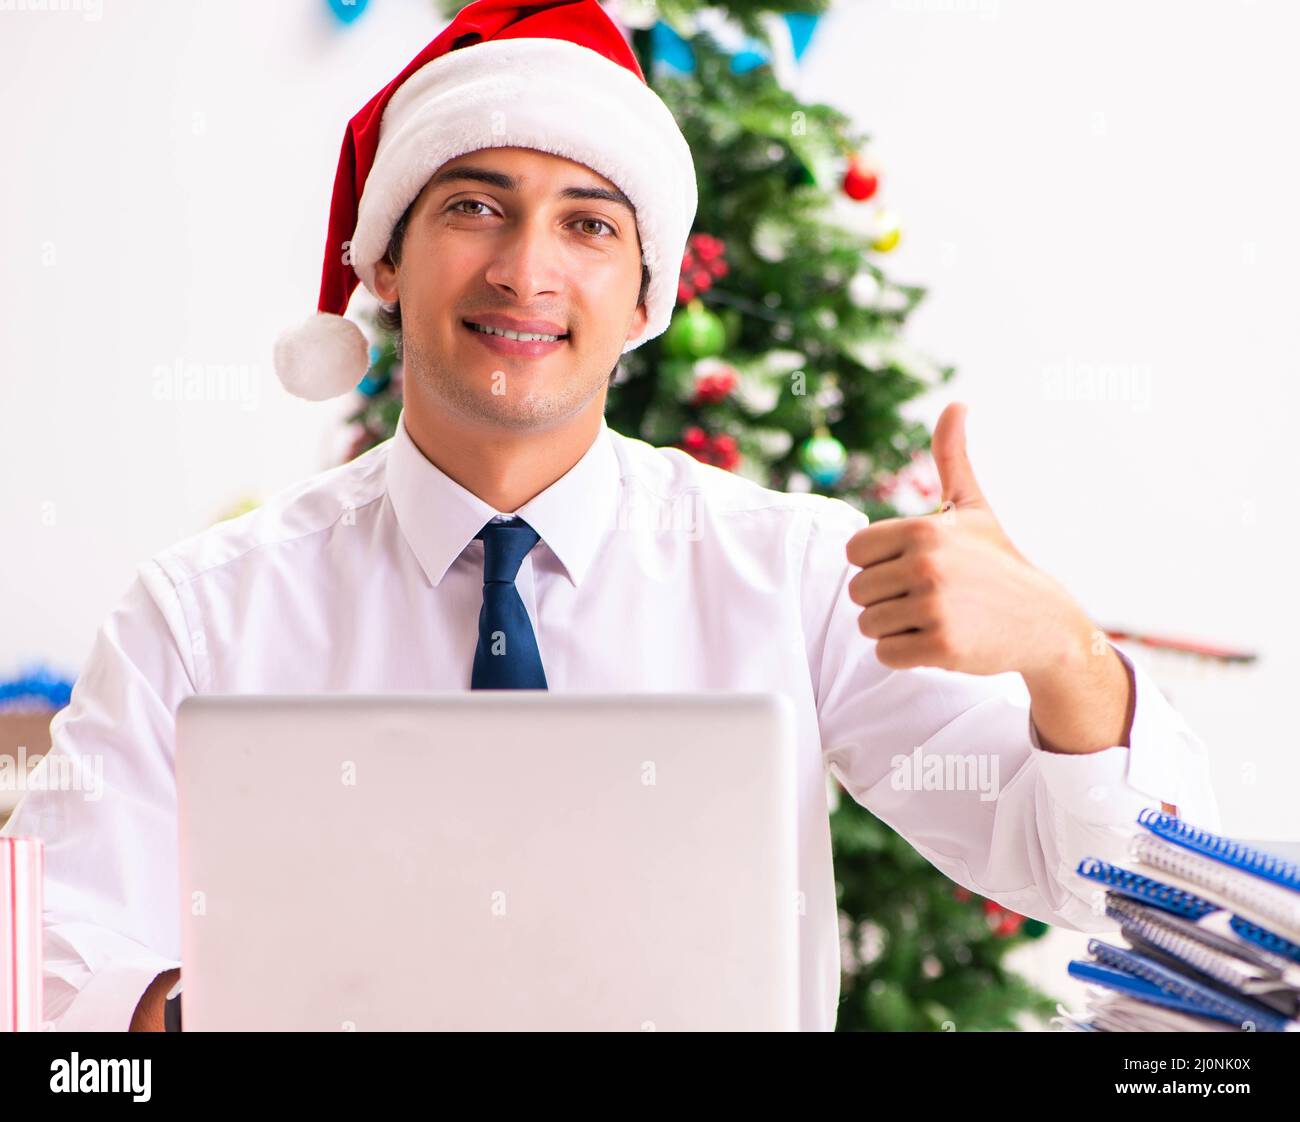 Employee businessman celebrating christmas in office Stock Photo